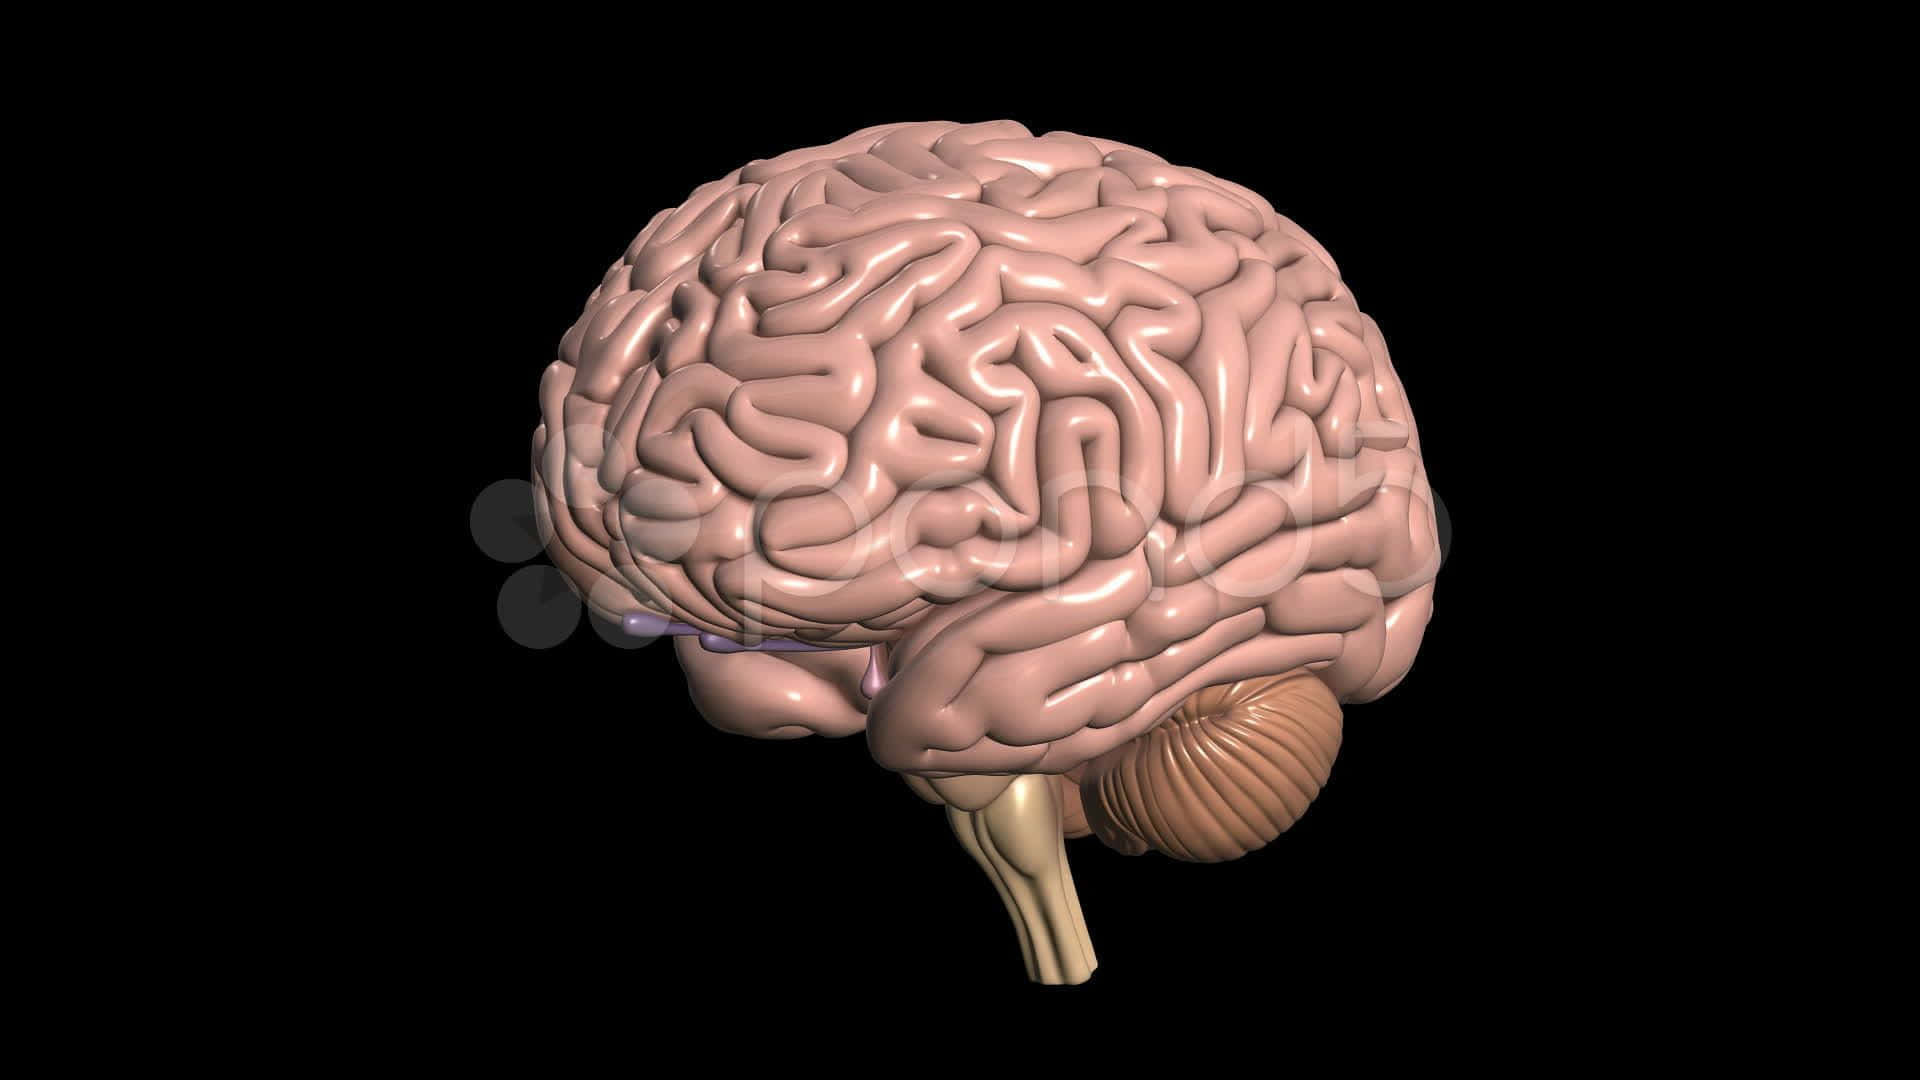 3dmodell Des Menschlichen Gehirns Wallpaper